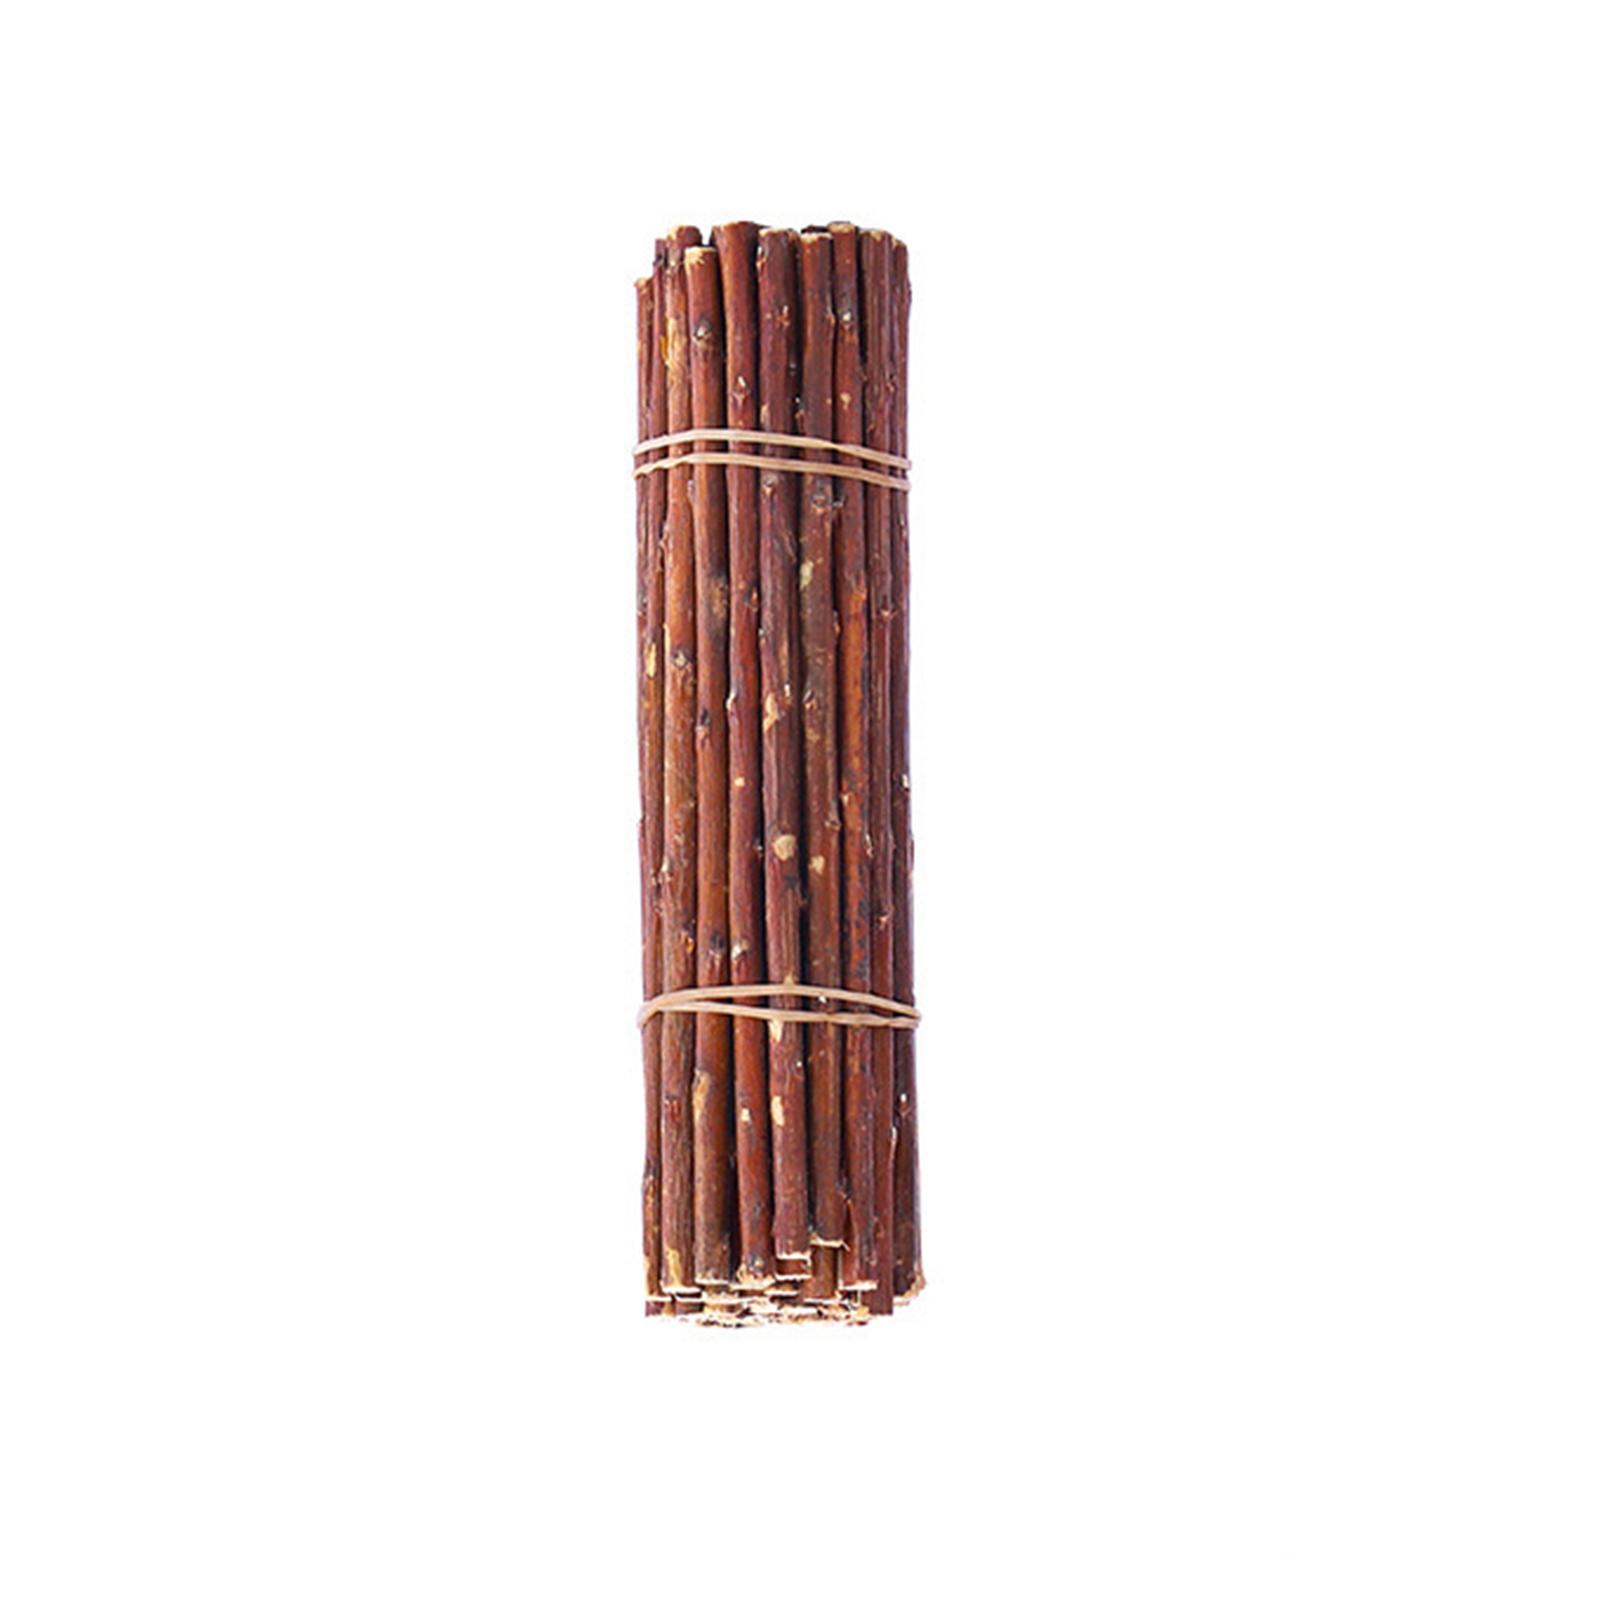 50pcs Wood Sticks for Crafts,  Sticks, Wood Log Sticks, Craft Twigs Sticks for DIY Crafts Photo Props Art Projects